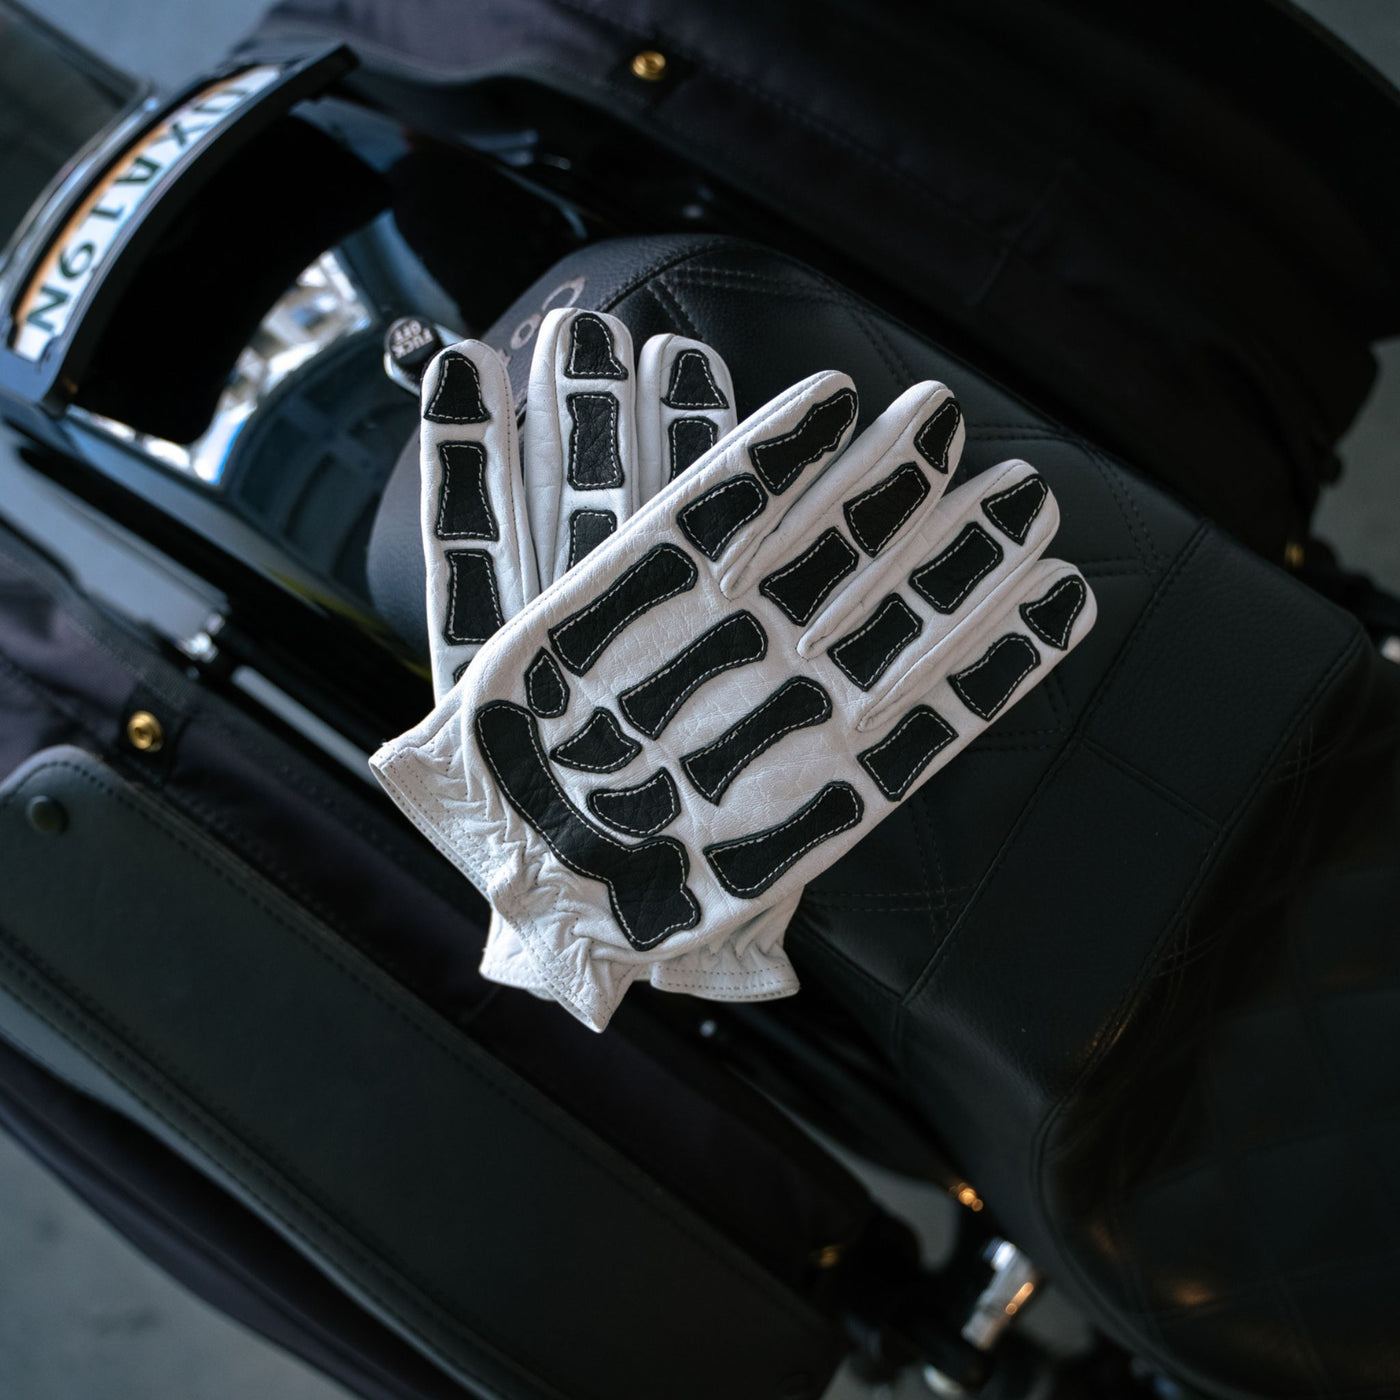 Skeleton Leather Motorcycle Gloves - White-Black